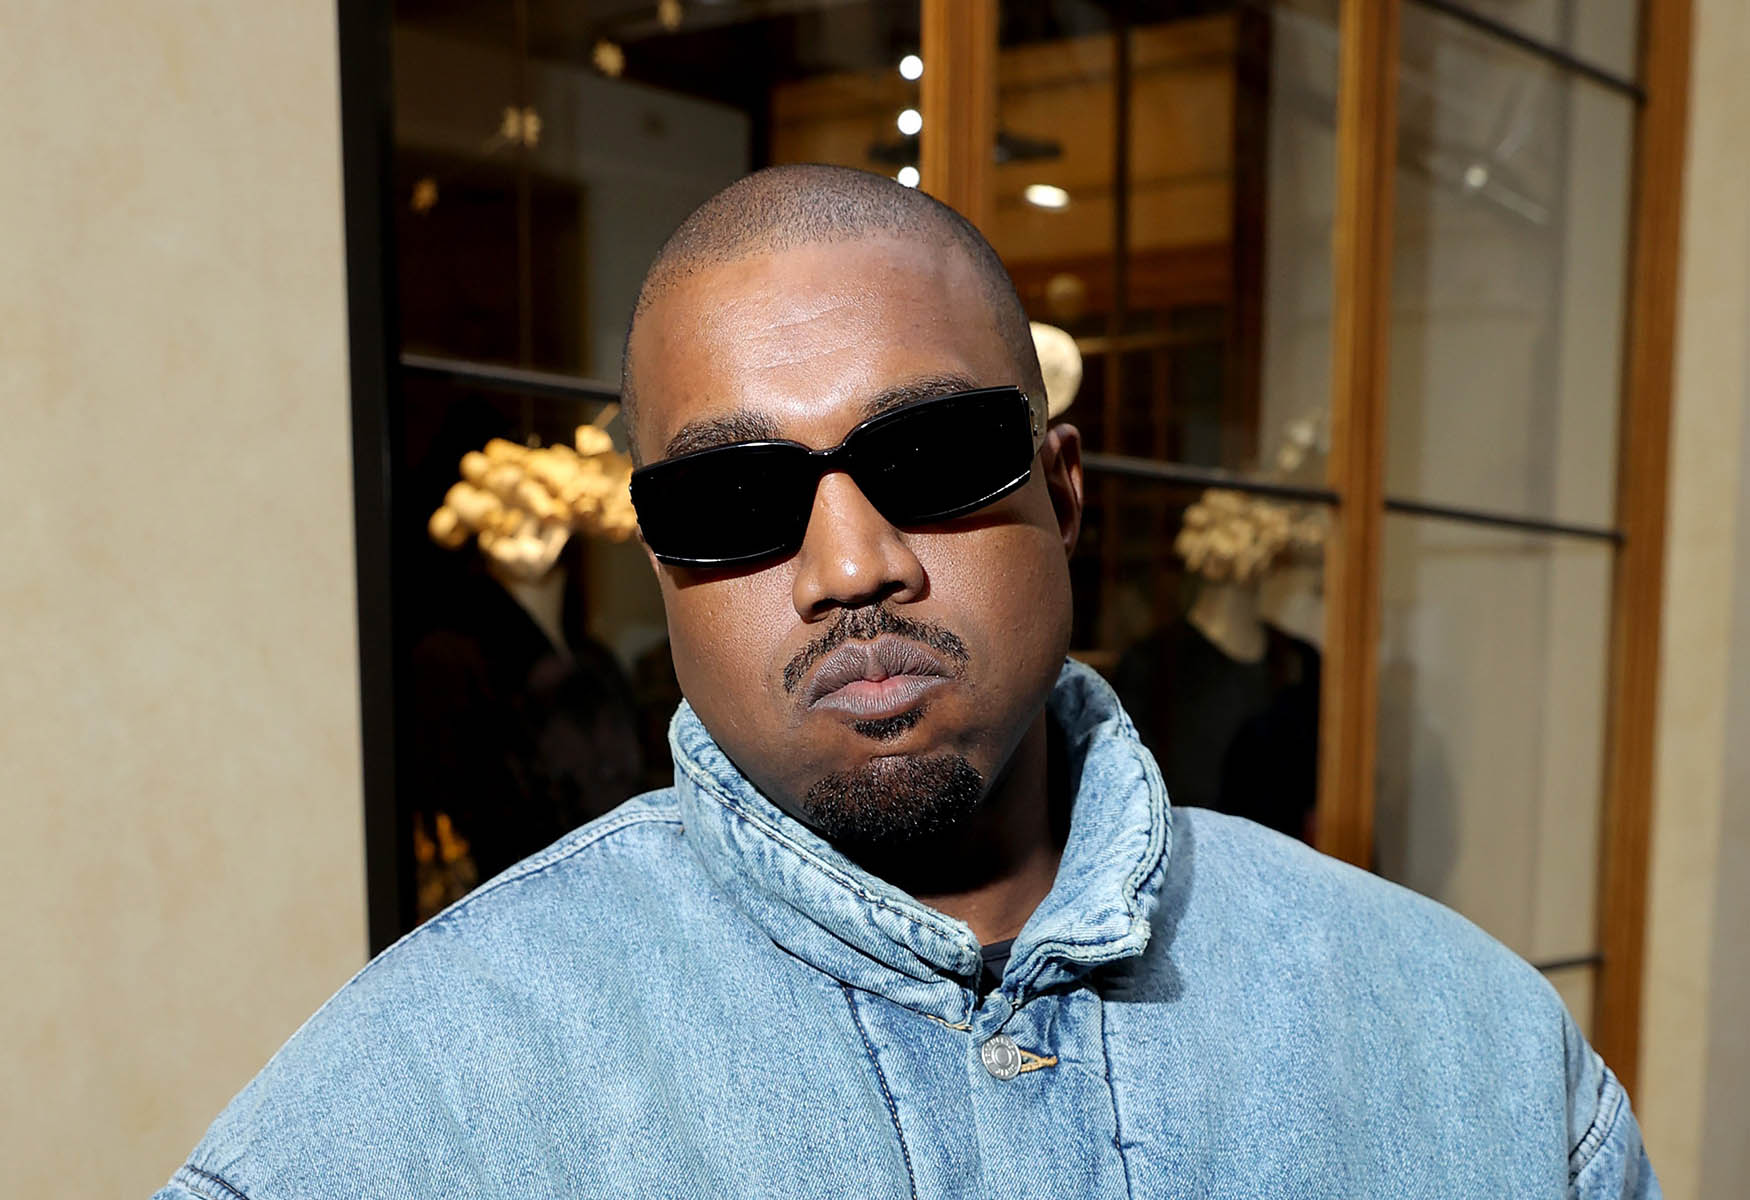 Kanye West’s Unhinged Rant Raises Concerns